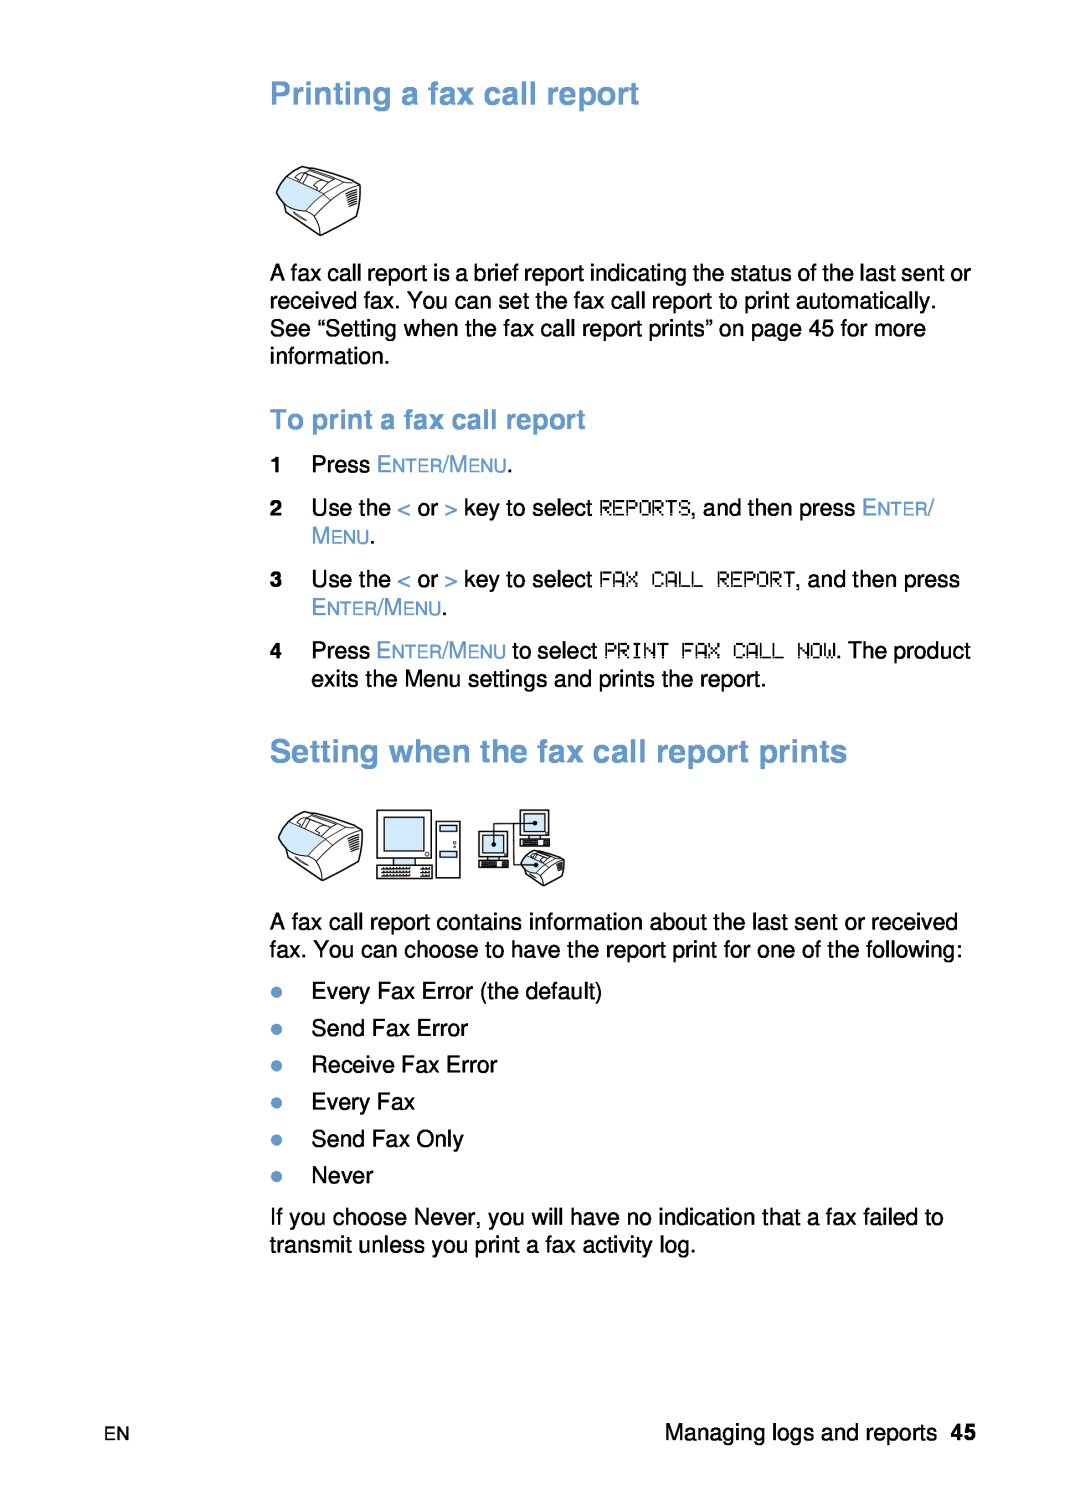 HP 3200 manual Printing a fax call report, Setting when the fax call report prints, To print a fax call report 